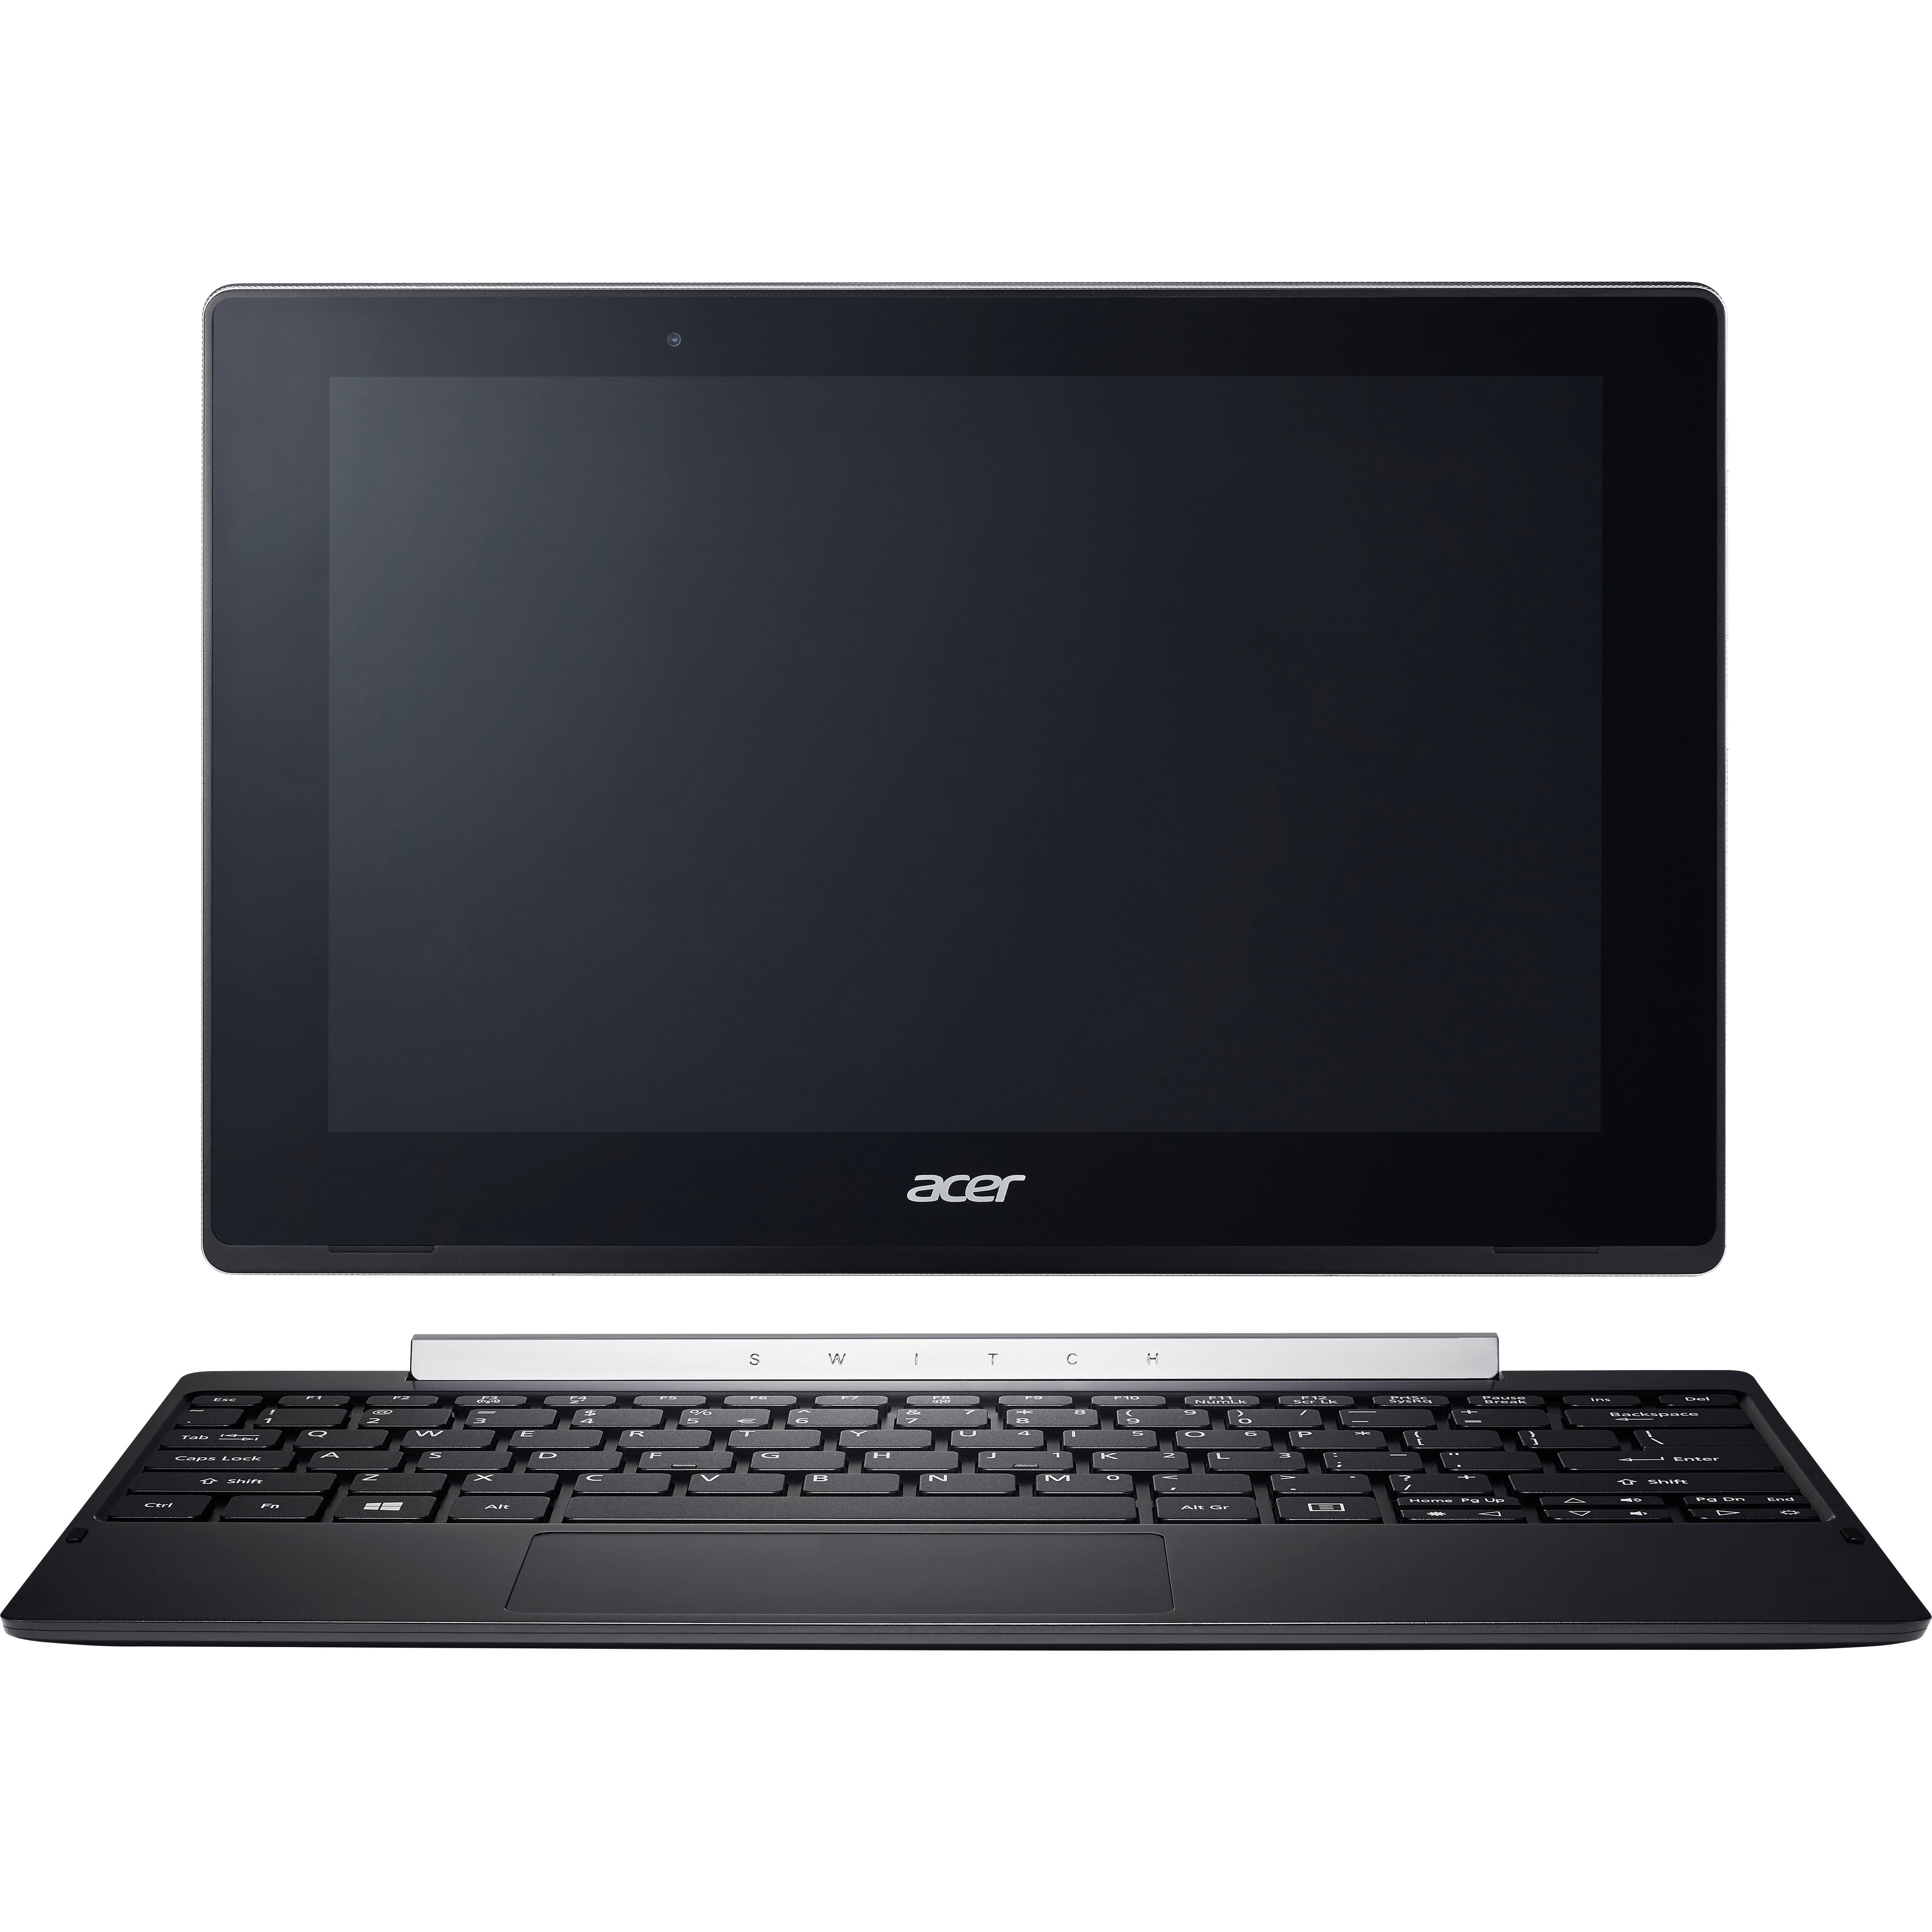 Acer Switch V 10 Sw5 017p 17jj 10 1 Atom X5 Z50 4 Gb Ram 64 Gb Ssd Us International Walmart Com Walmart Com